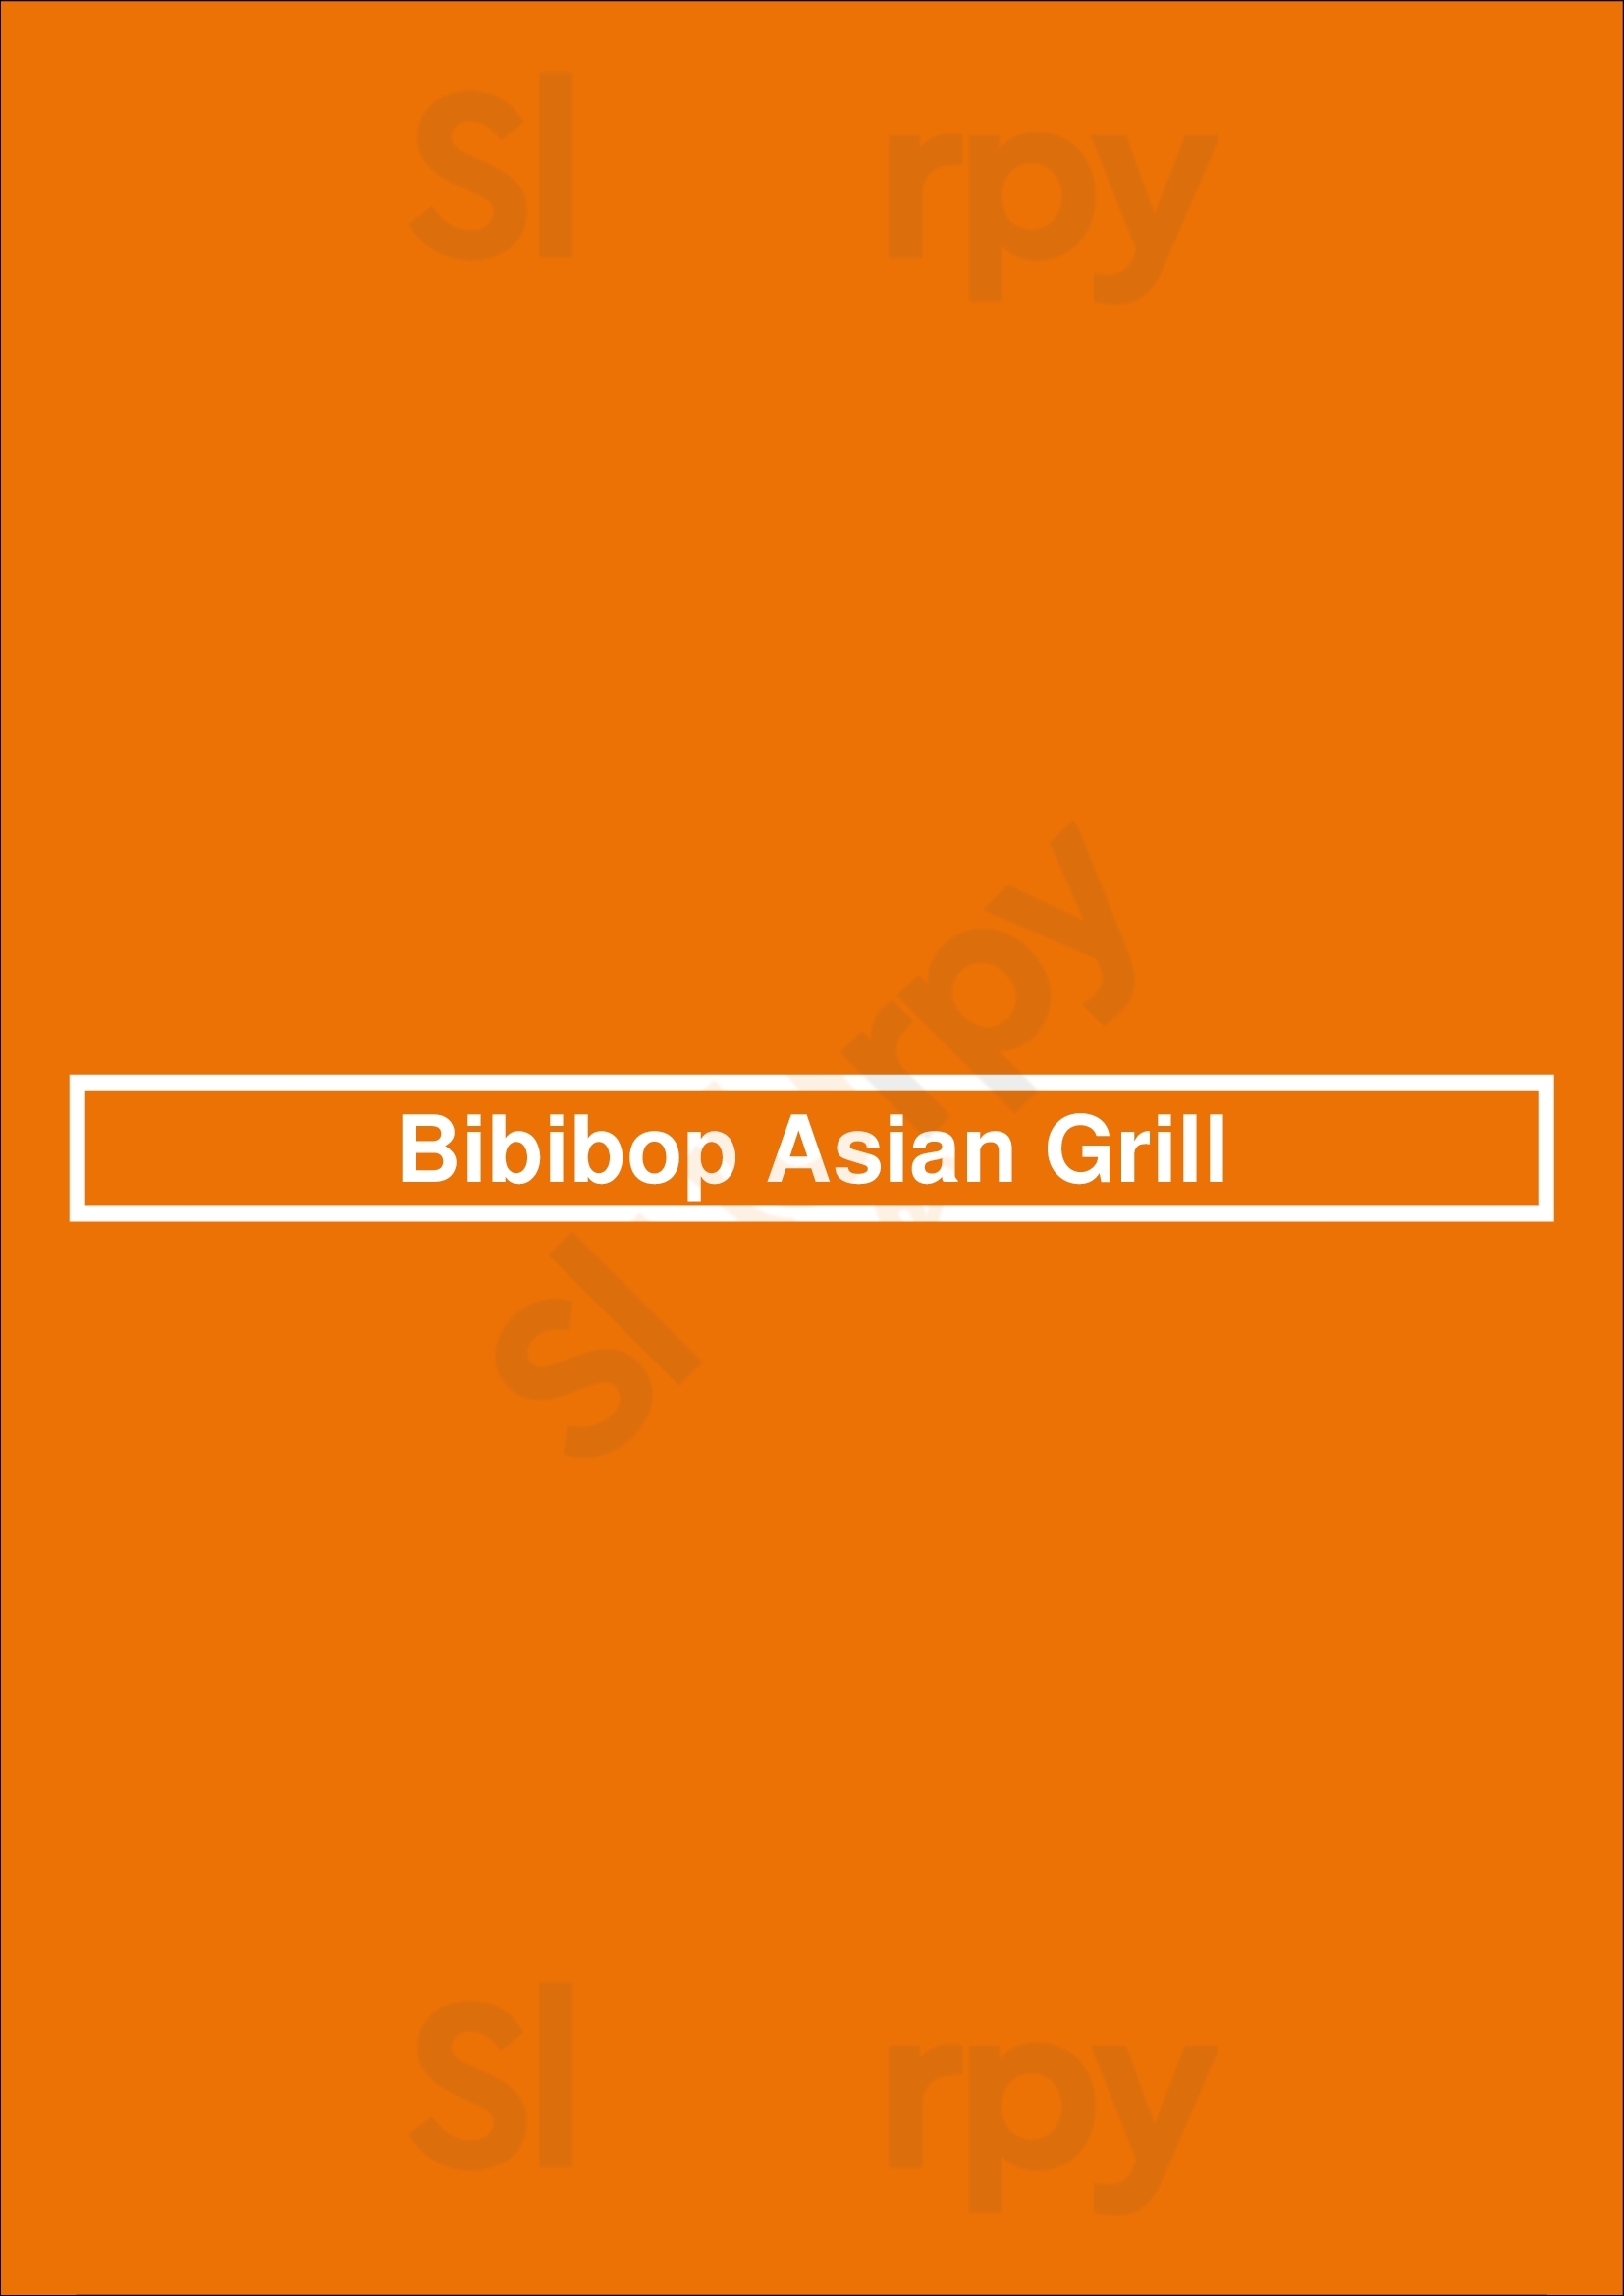 Bibibop Asian Grill Columbus Menu - 1